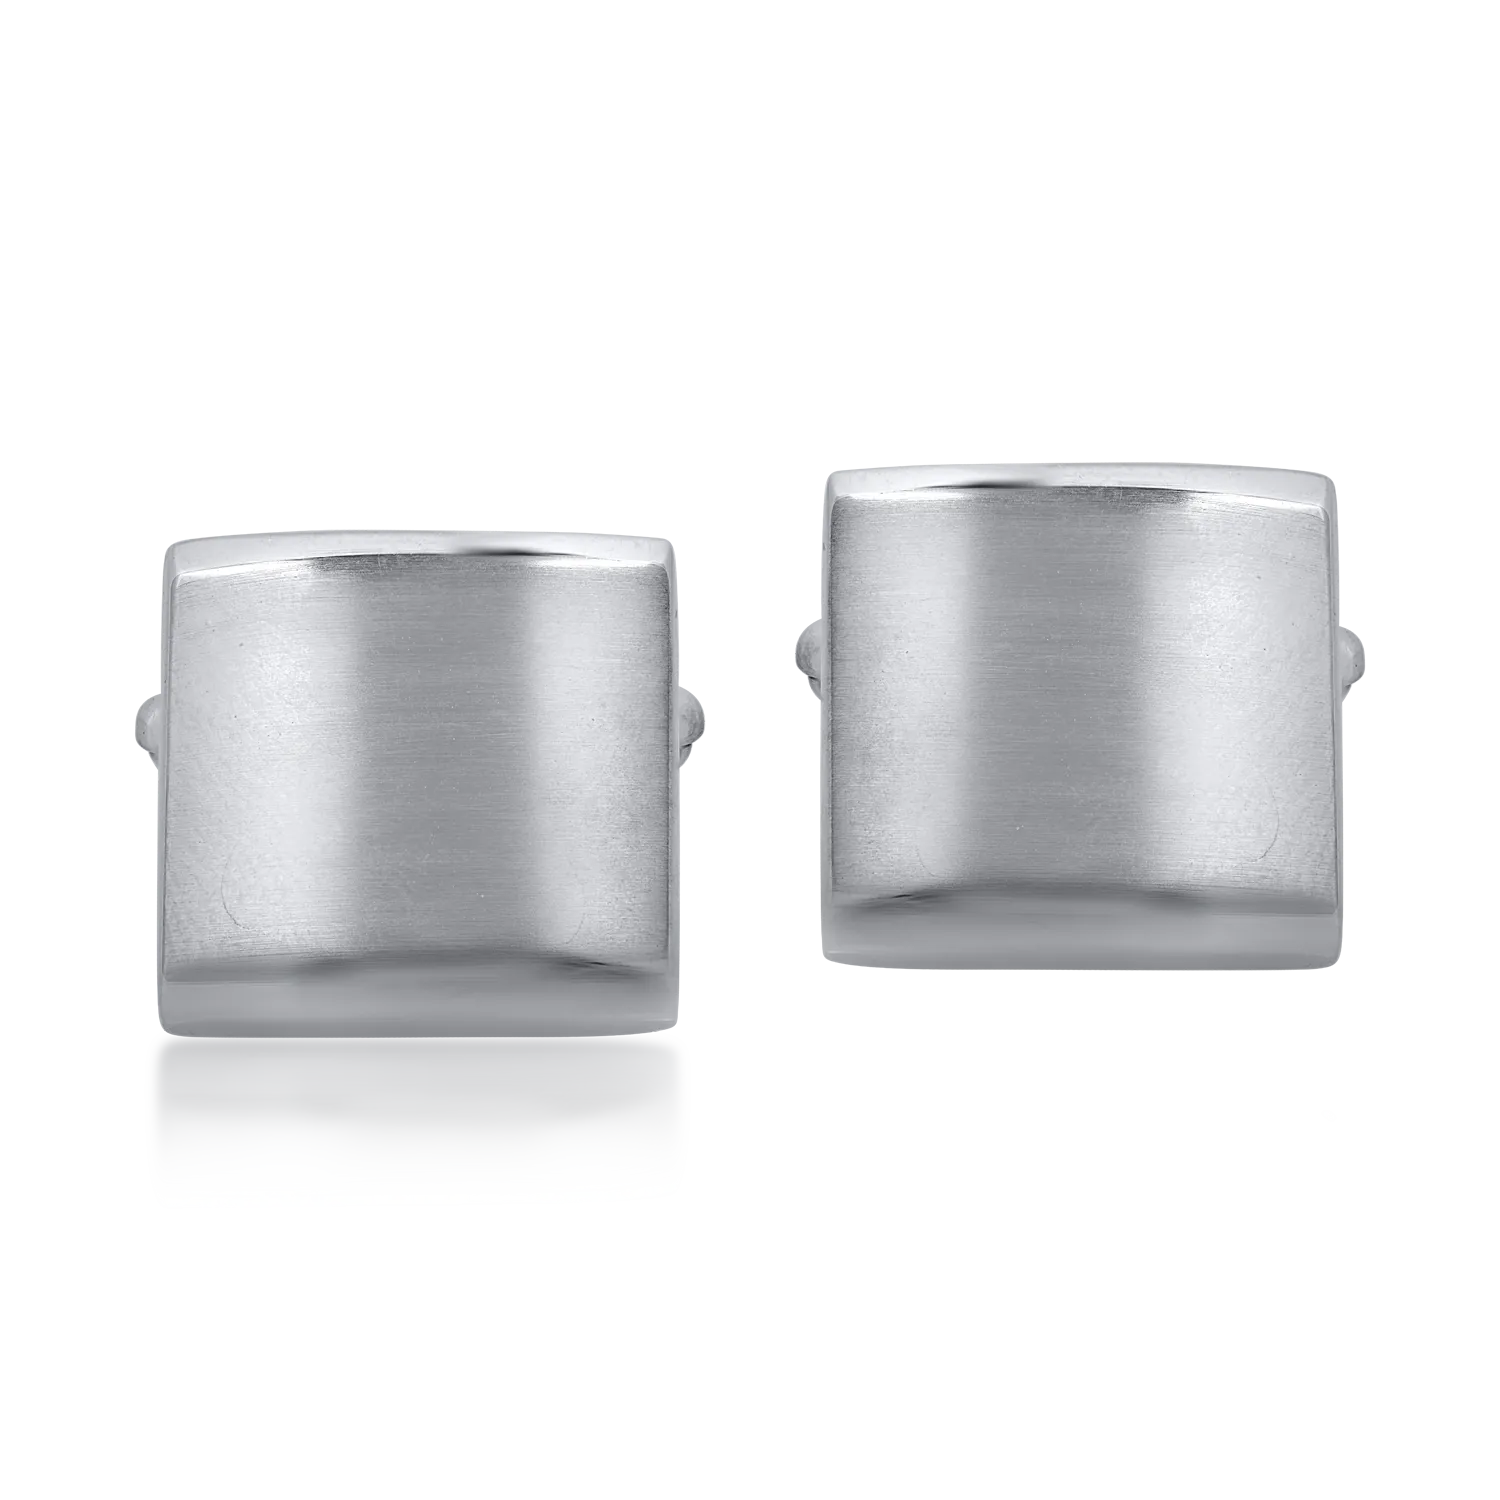 Silver cufflinks